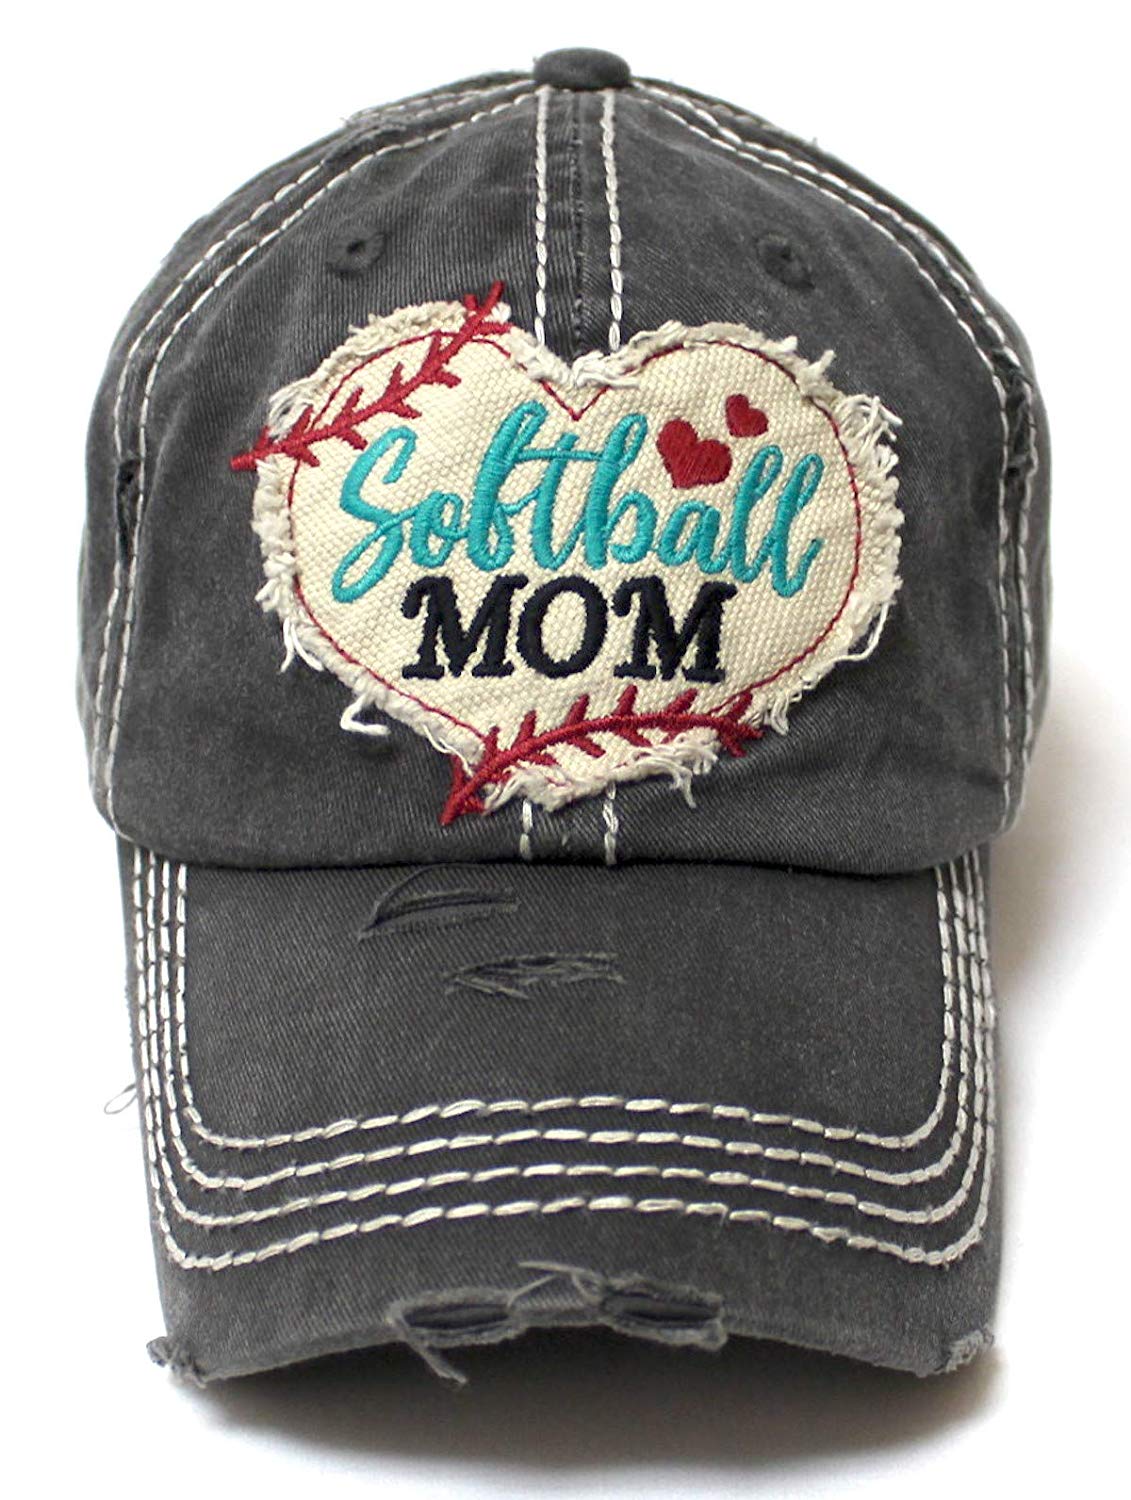 CAPS 'N VINTAGE Women's Softball Mom Baseball Cap Heart Softball Patch Embroidery, Black - Caps 'N Vintage 